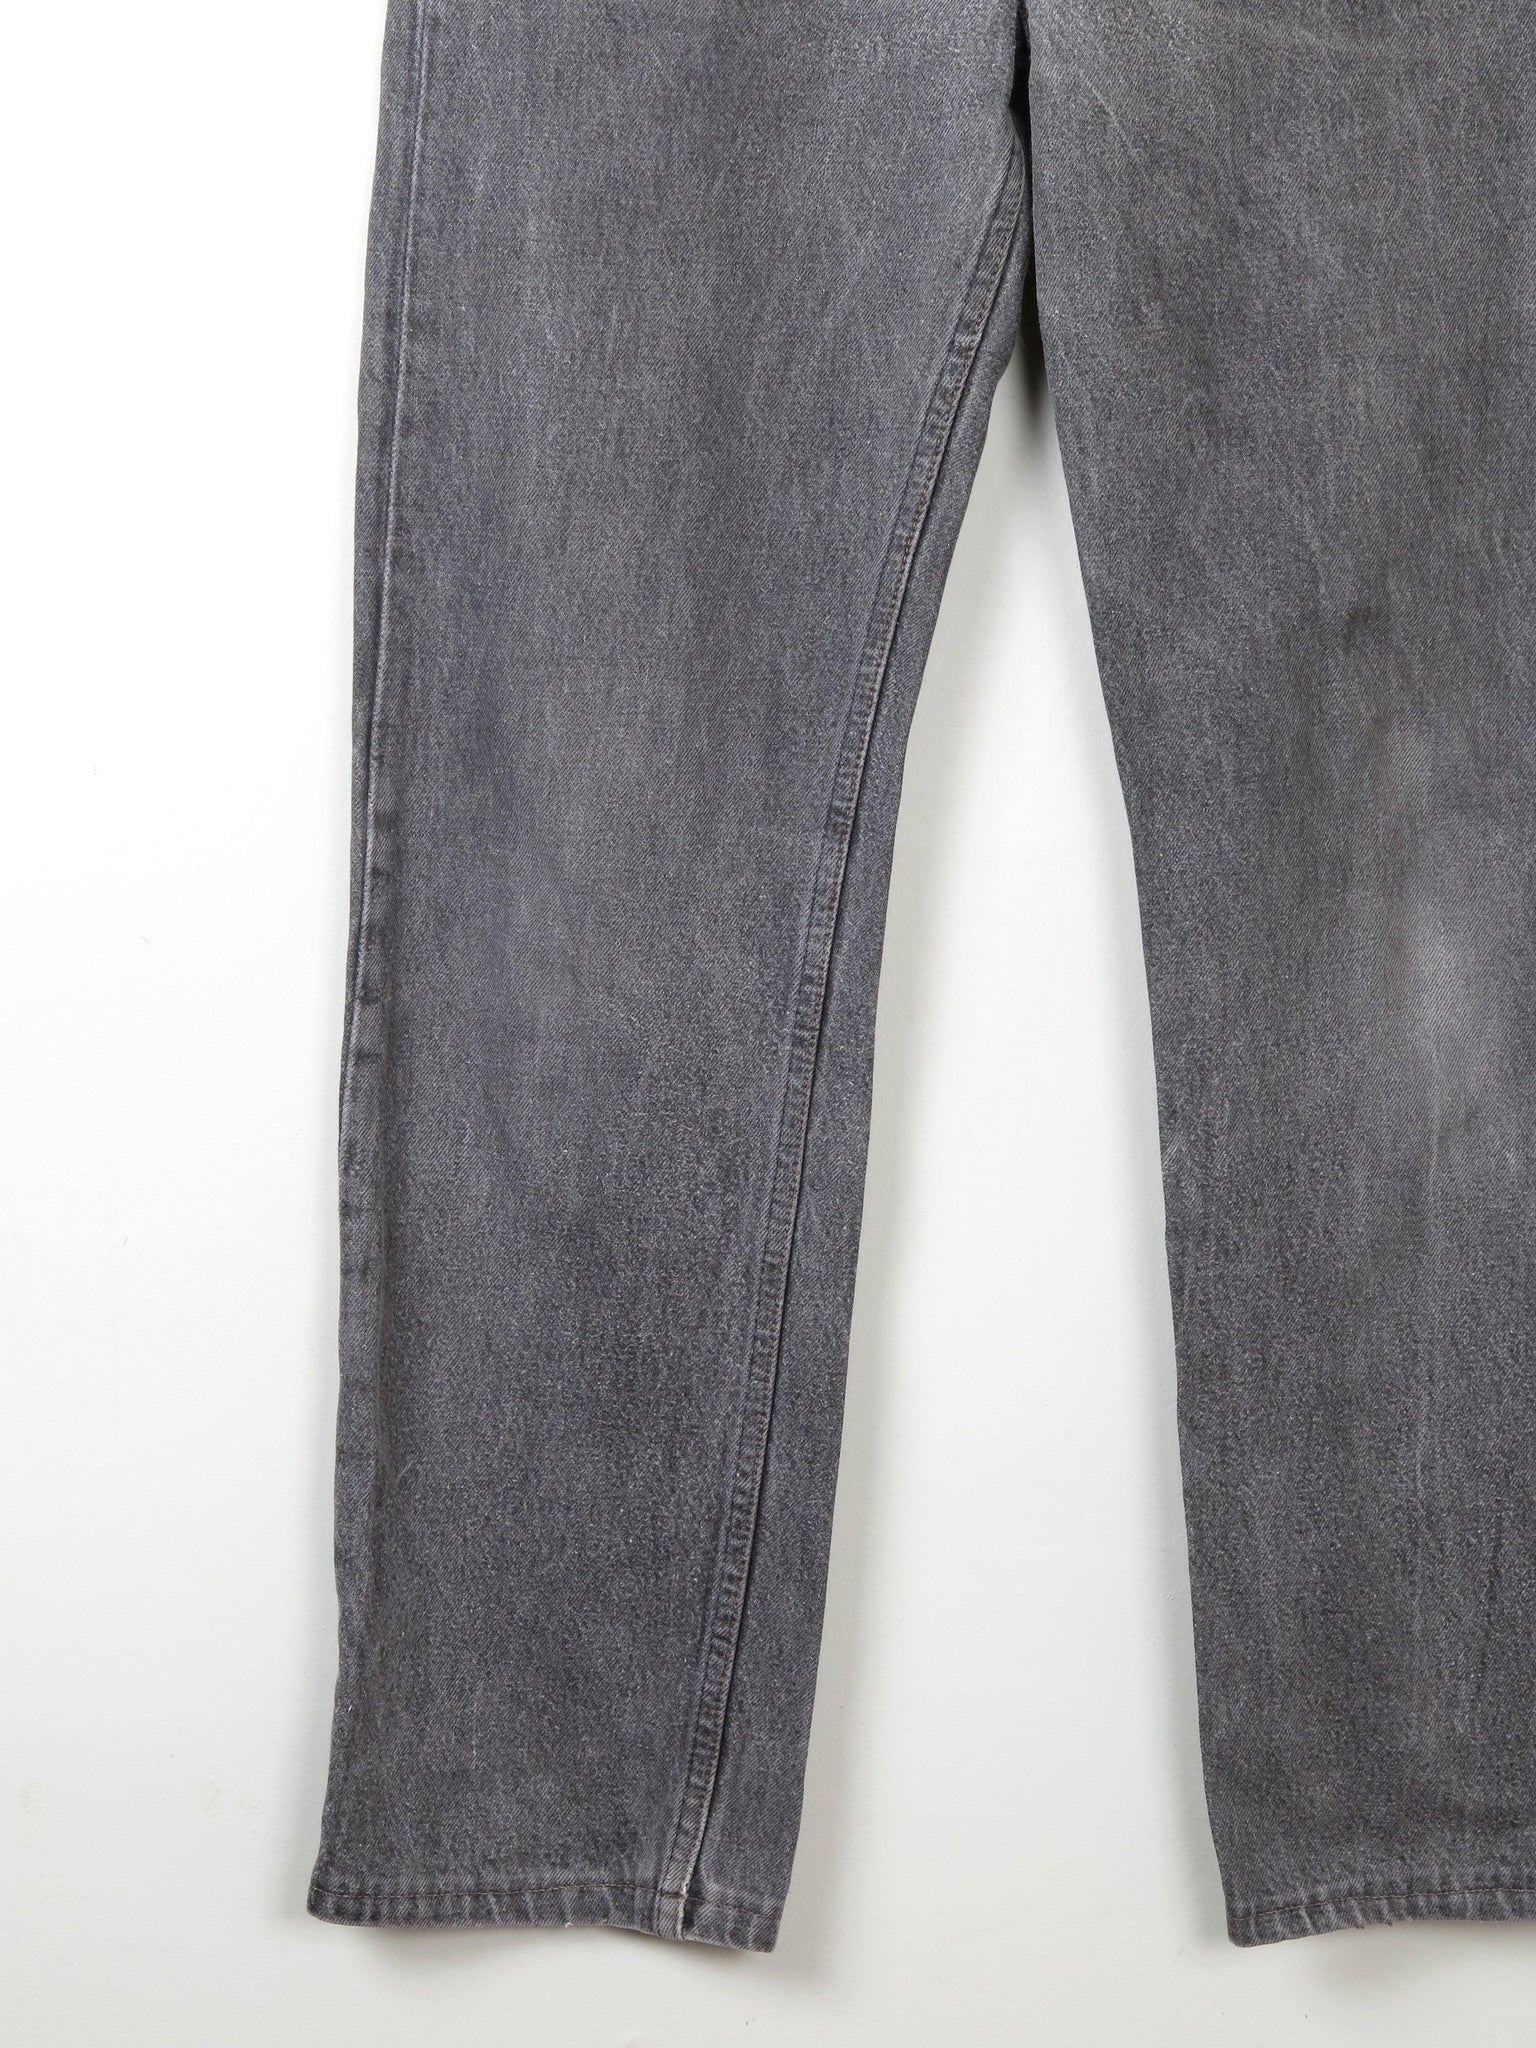 Grey Vintage Levi's Jeans 501s 32" - The Harlequin